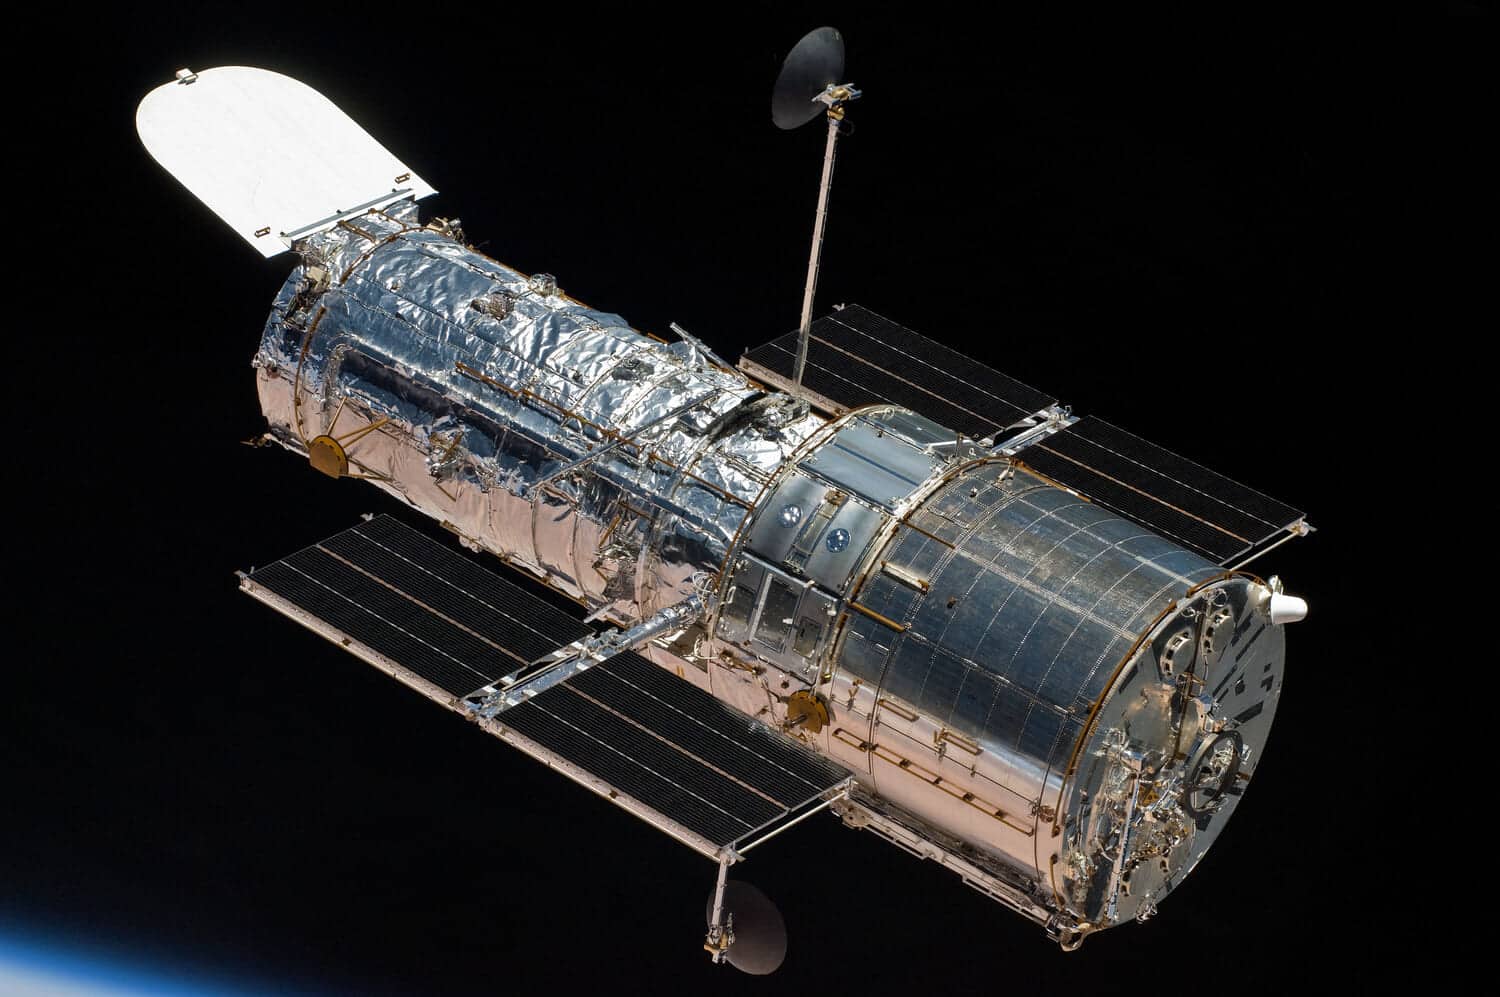 NASAとSpaceXは、ハッブルの延命のため宇宙船ドラゴンを使用する可能性について共同で検討する